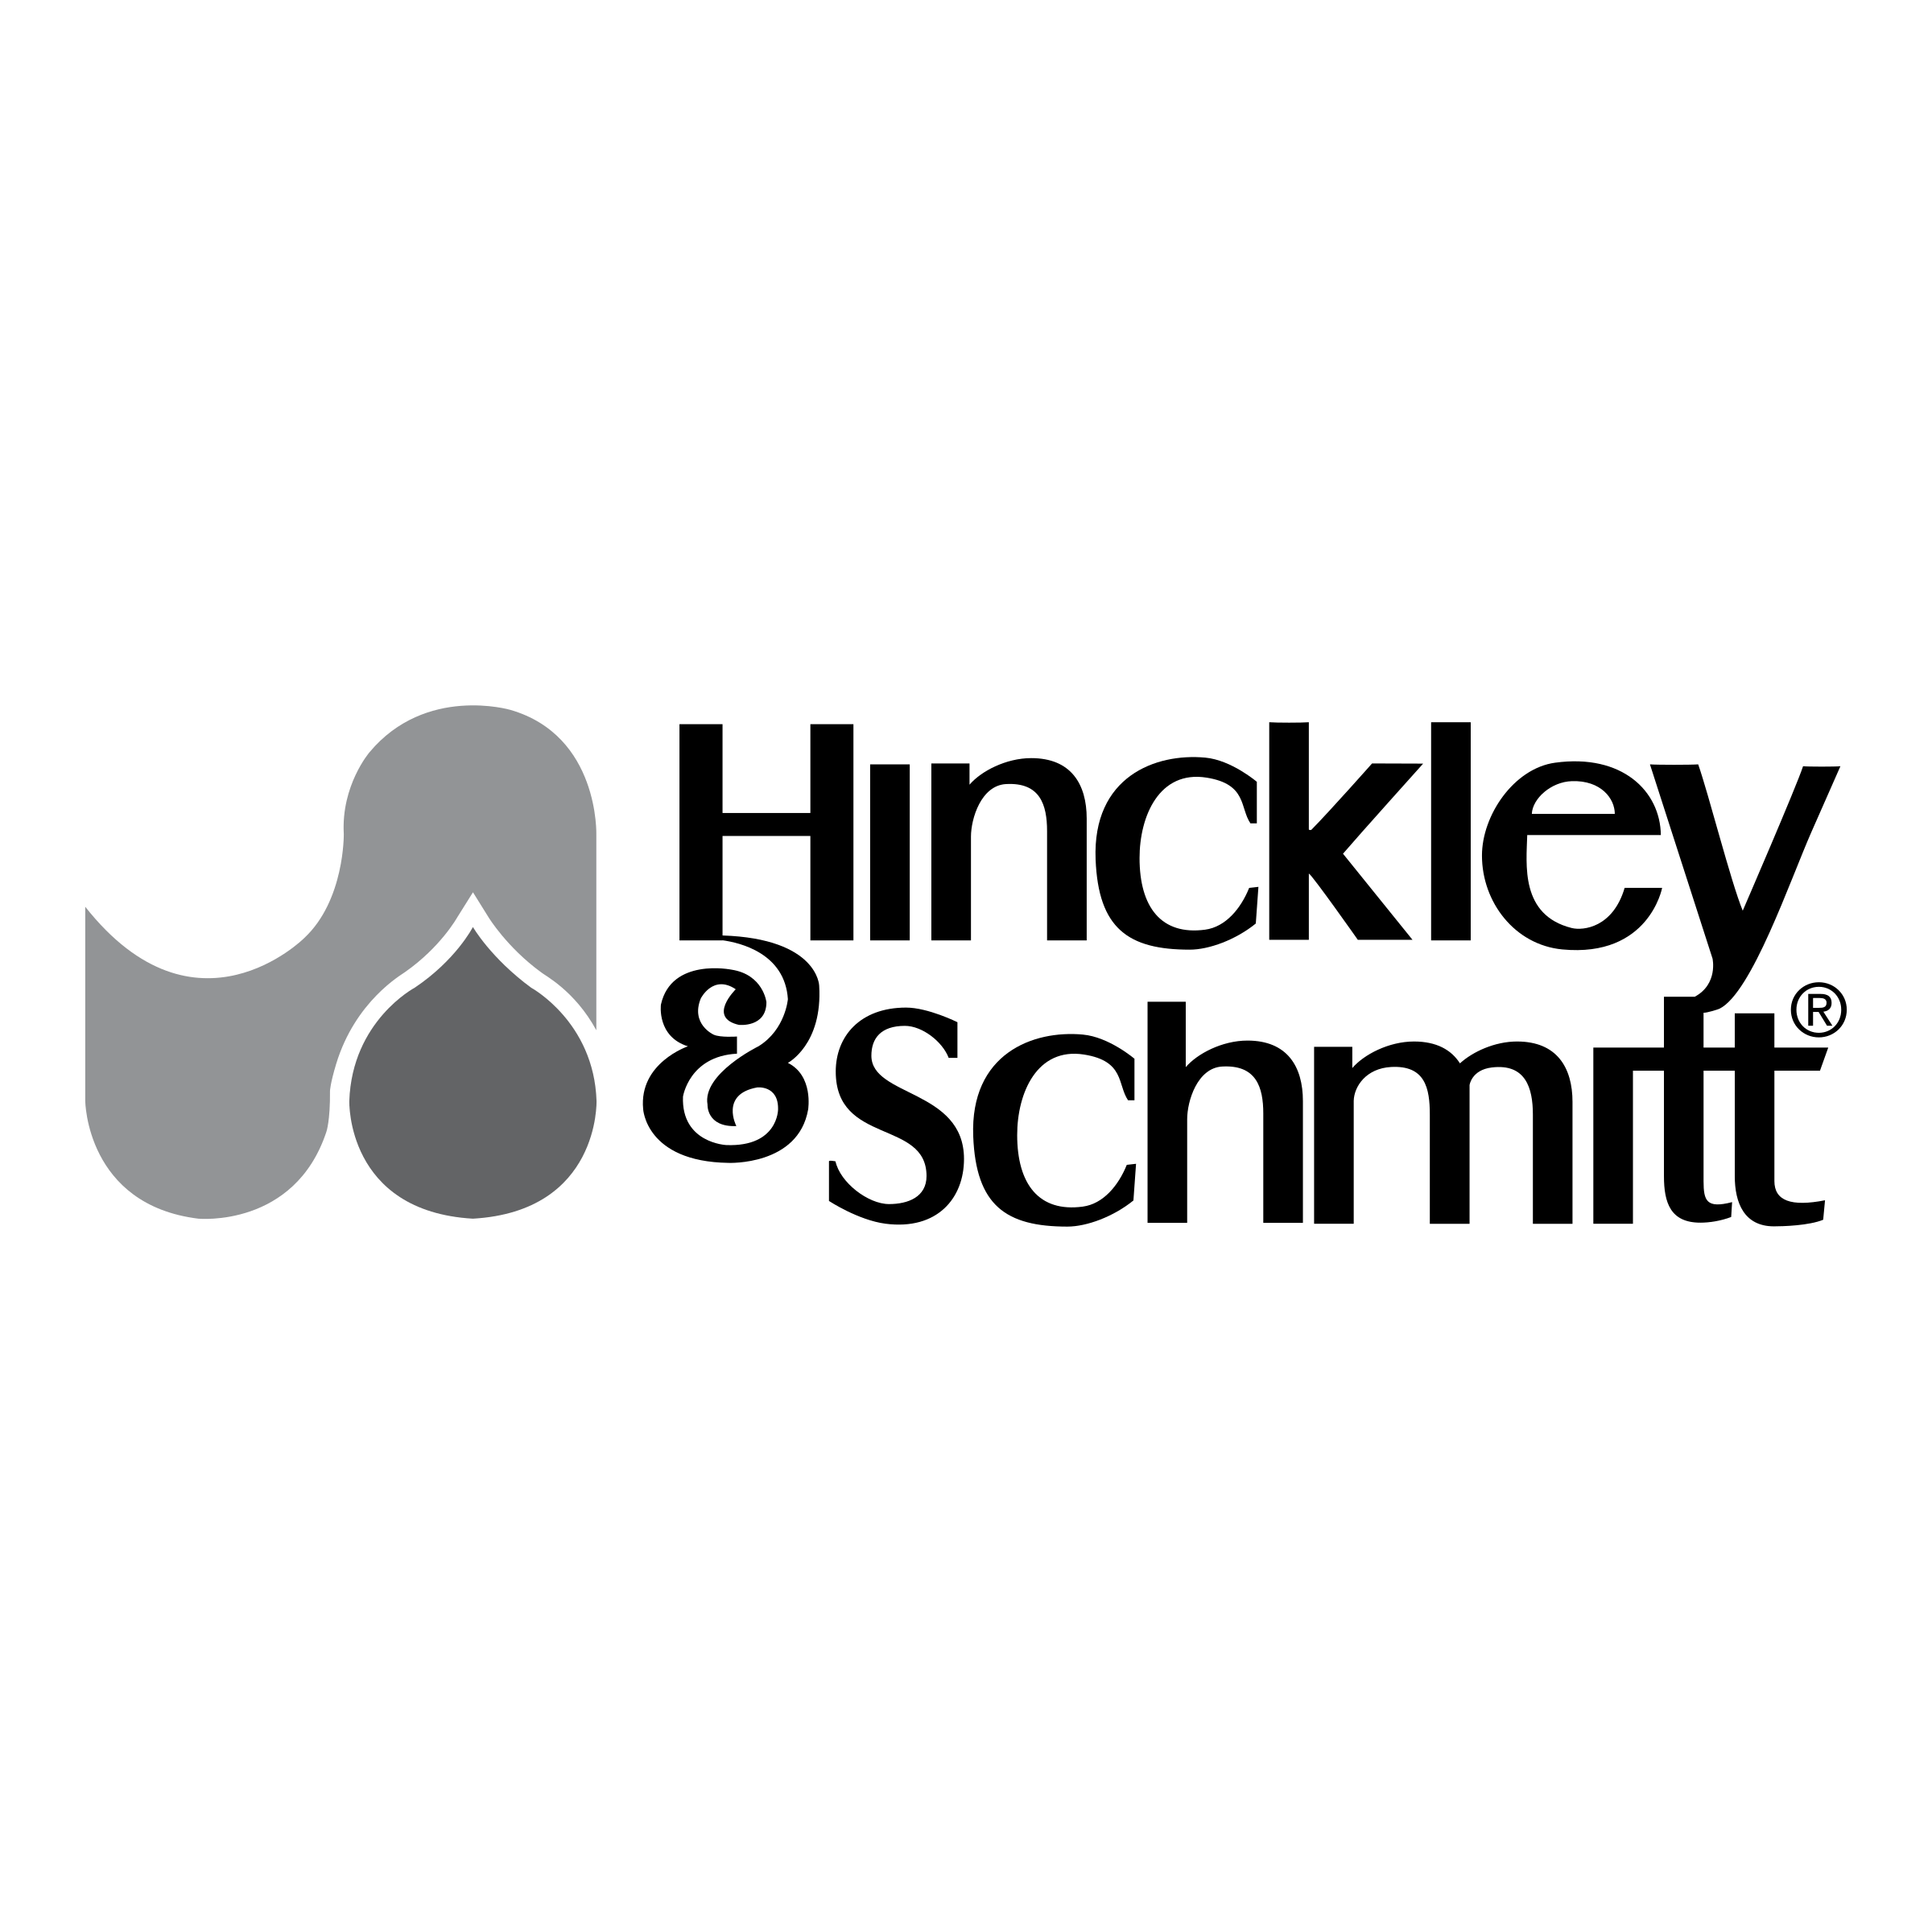 Hinckley Logo - Hinckley & Schmitt Logo PNG Transparent & SVG Vector - Freebie Supply